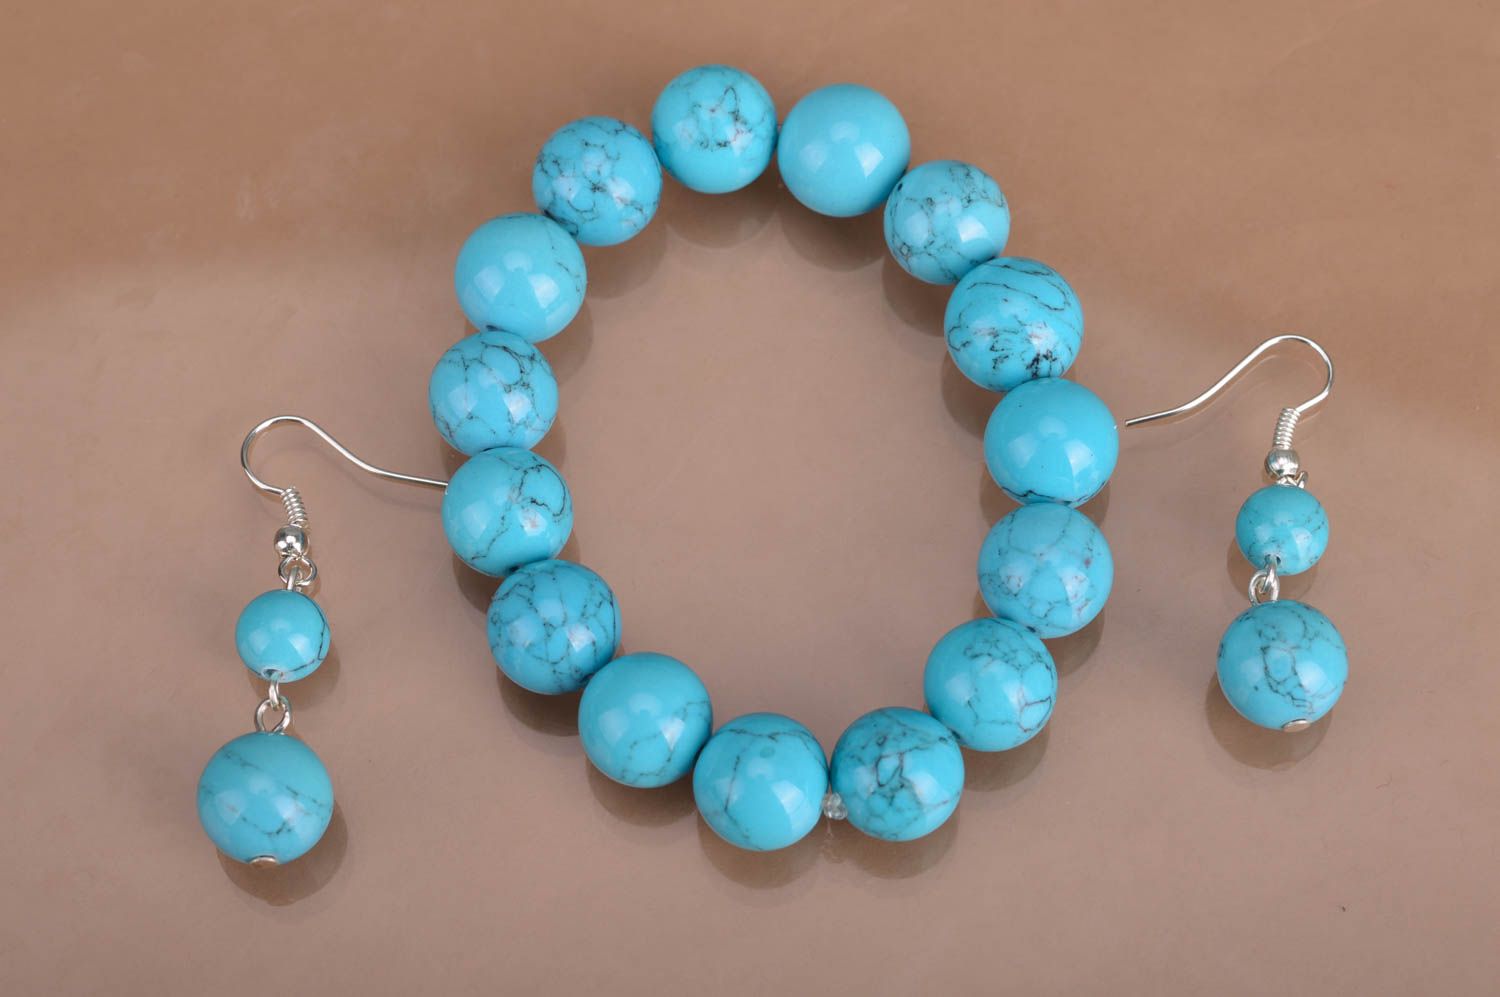 Handmade beaded jewelry set wrist bracelet and earrings blue turquoise color photo 5